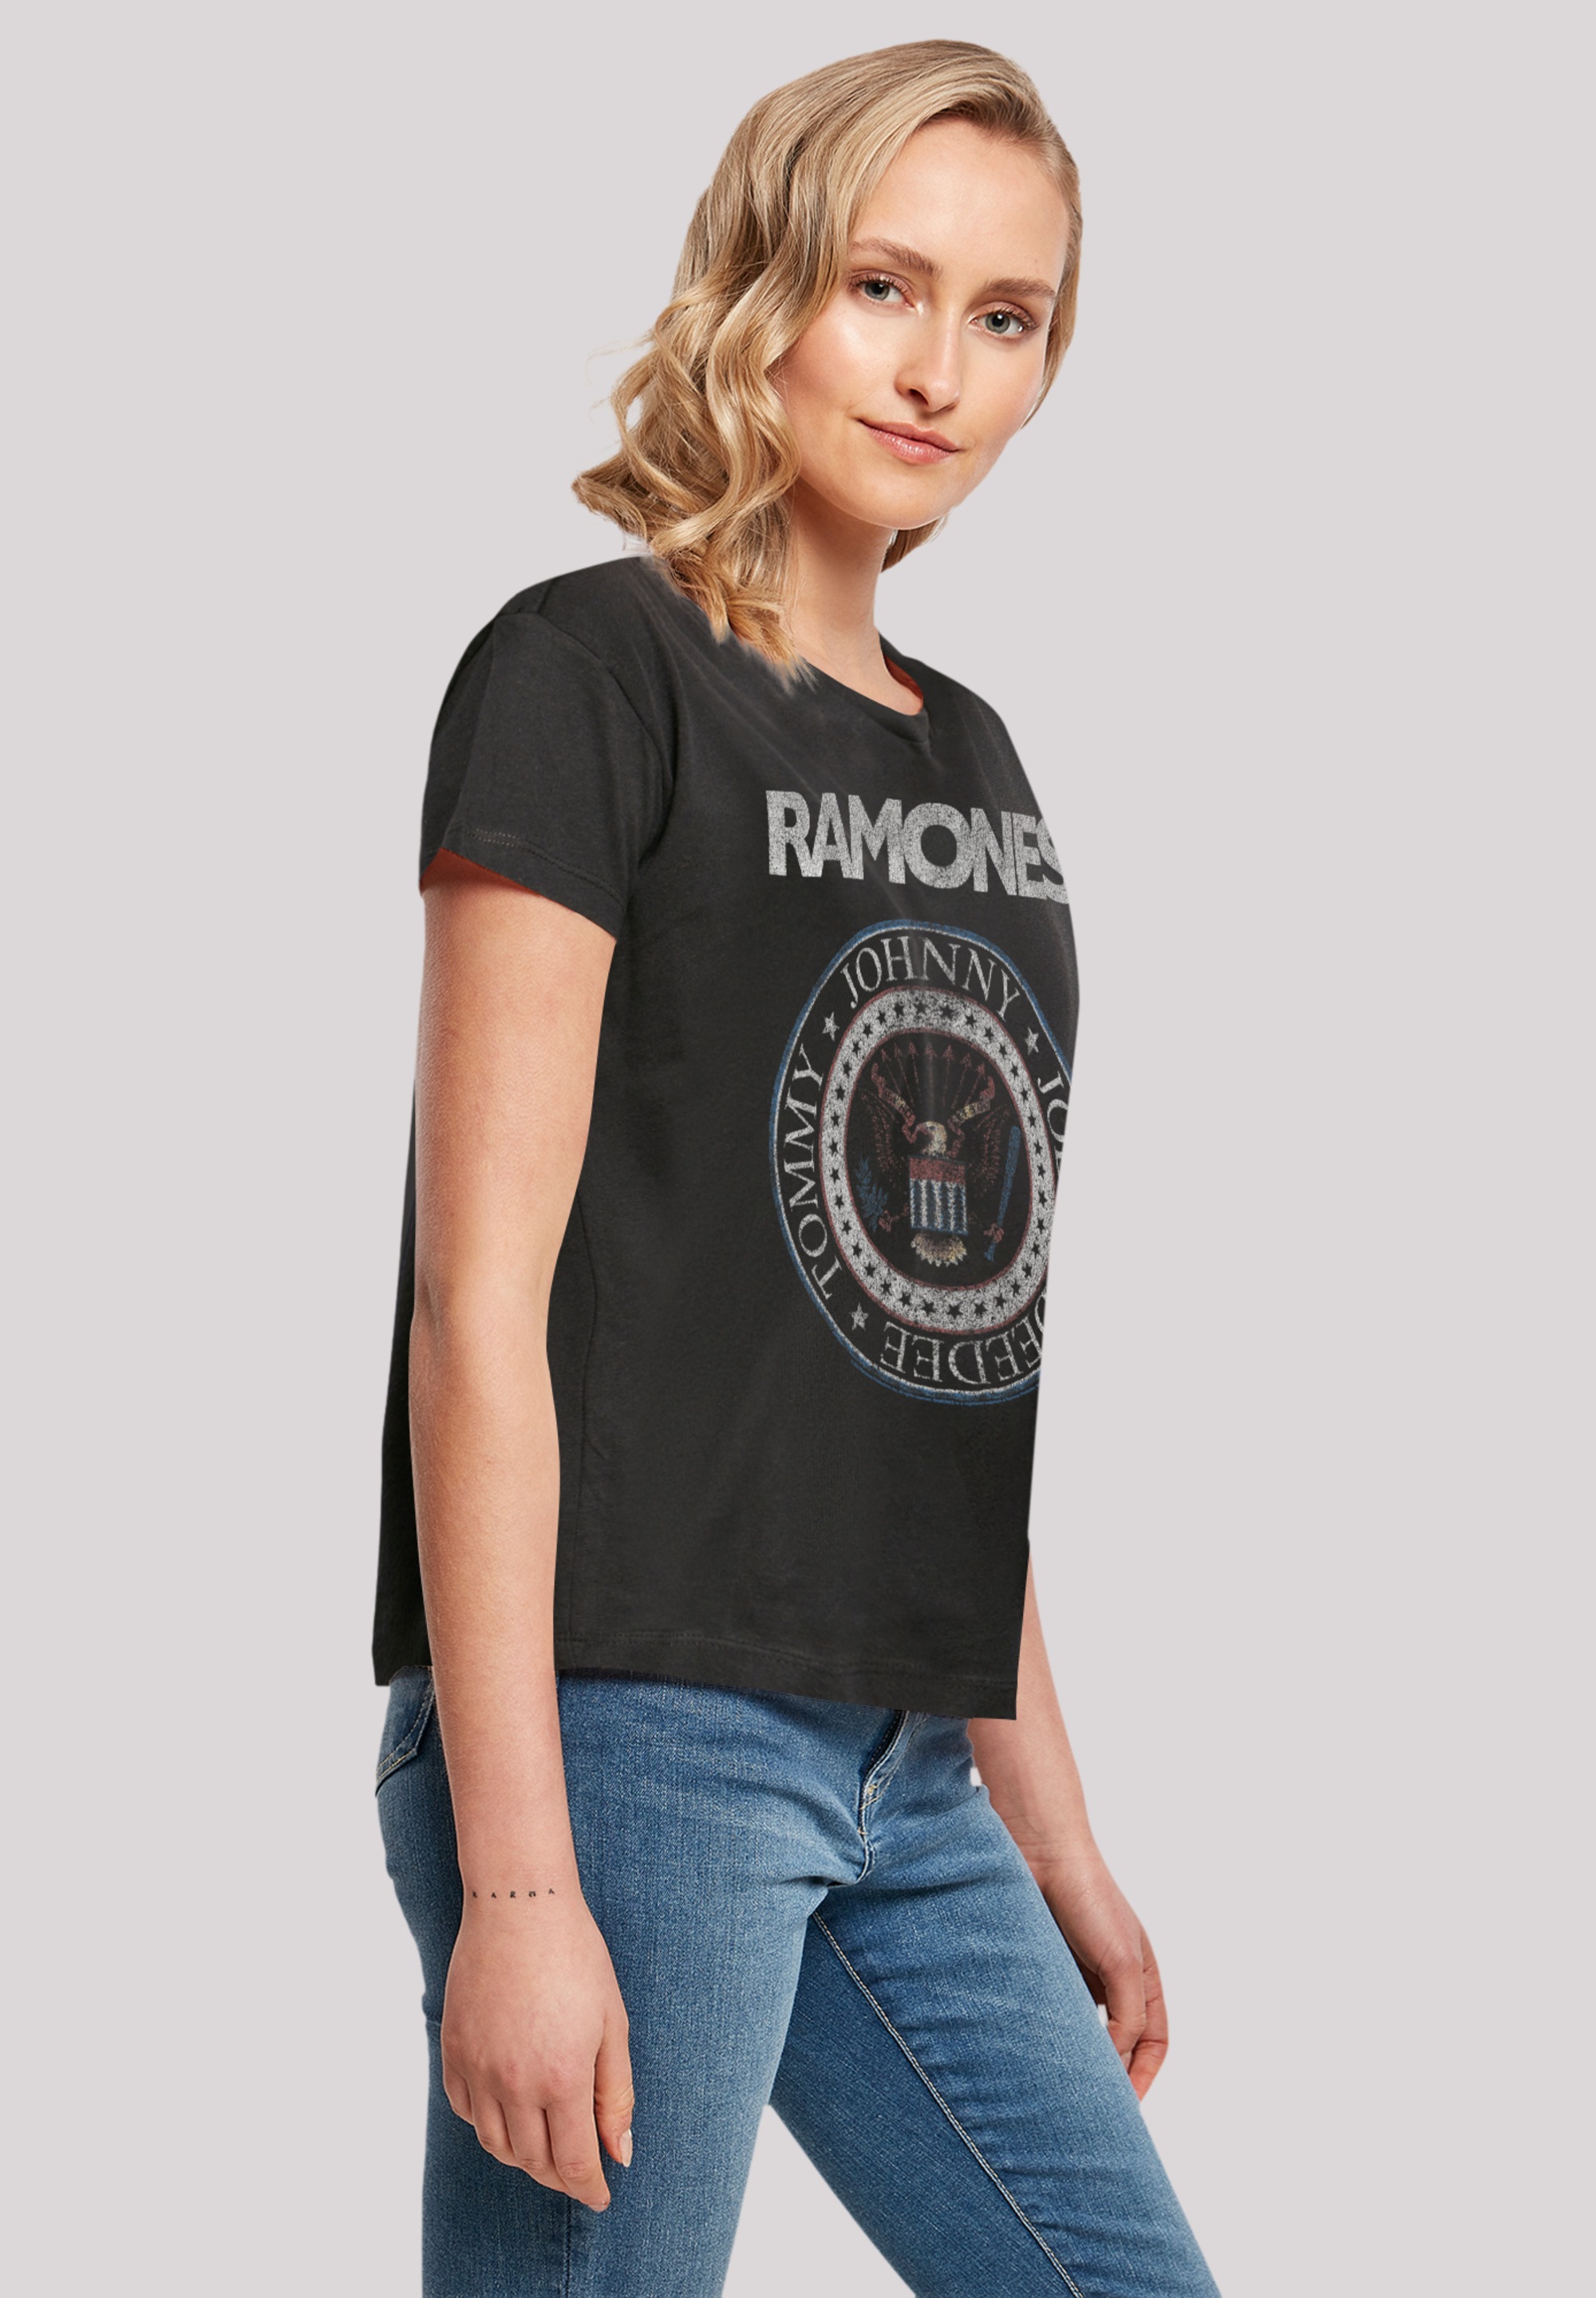 F4NT4STIC T-Shirt Band Seal«, White Red Premium Rock Qualität, »Ramones Musik And | Band, walking online Rock-Musik kaufen I\'m